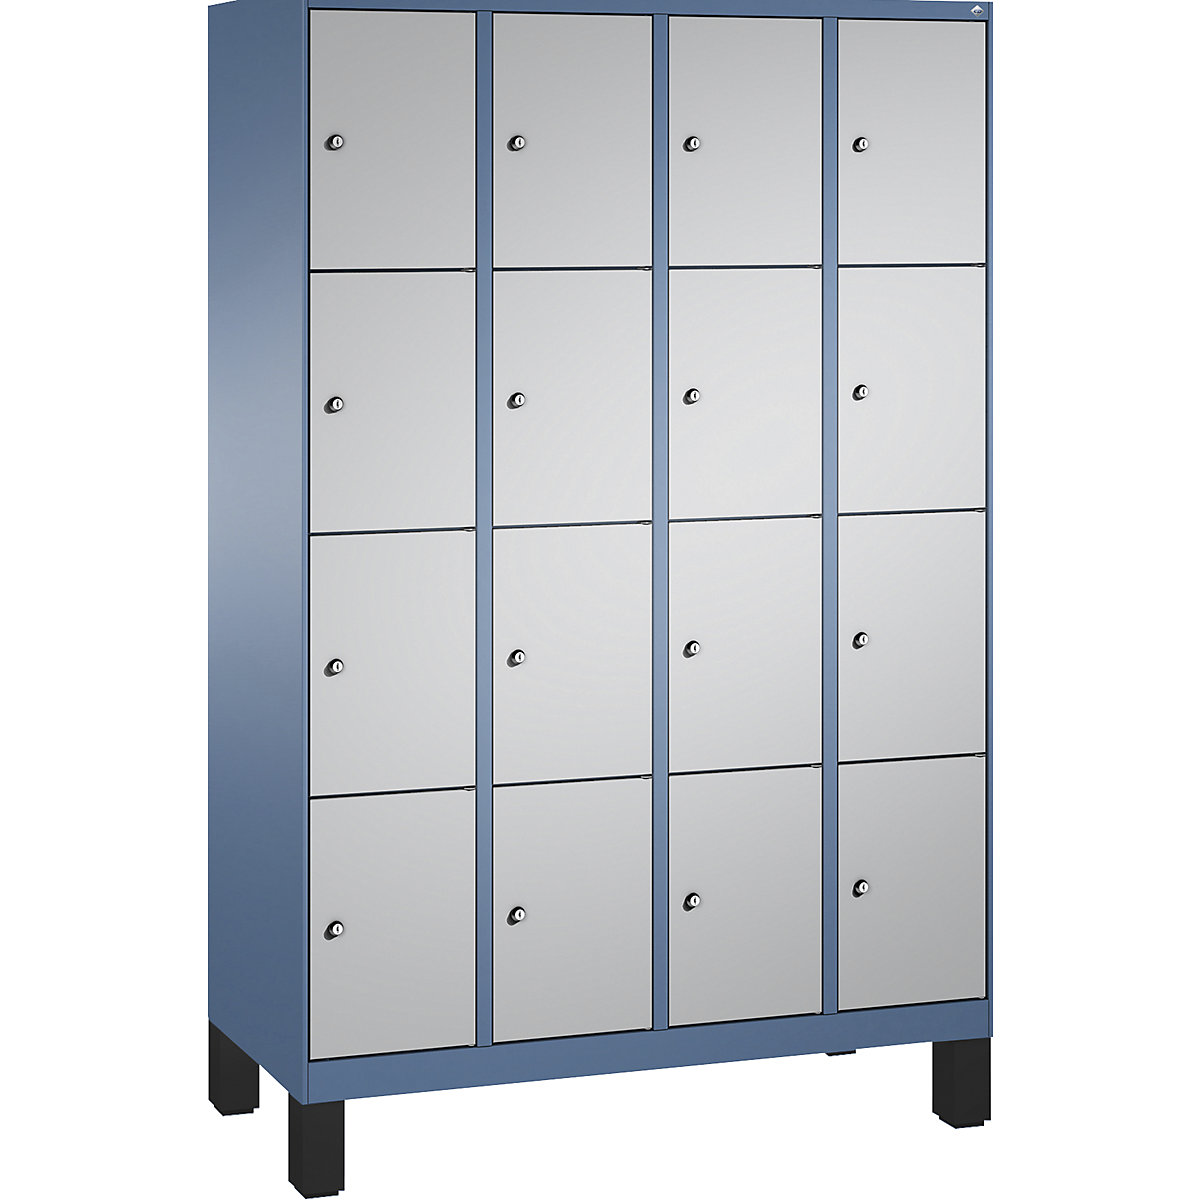 Armário de cacifos EVOLO, com pés – C+P, 4 compartimentos, 4 cacifos cada, largura do compartimento 300 mm, azul distante / cinza alumínio-14